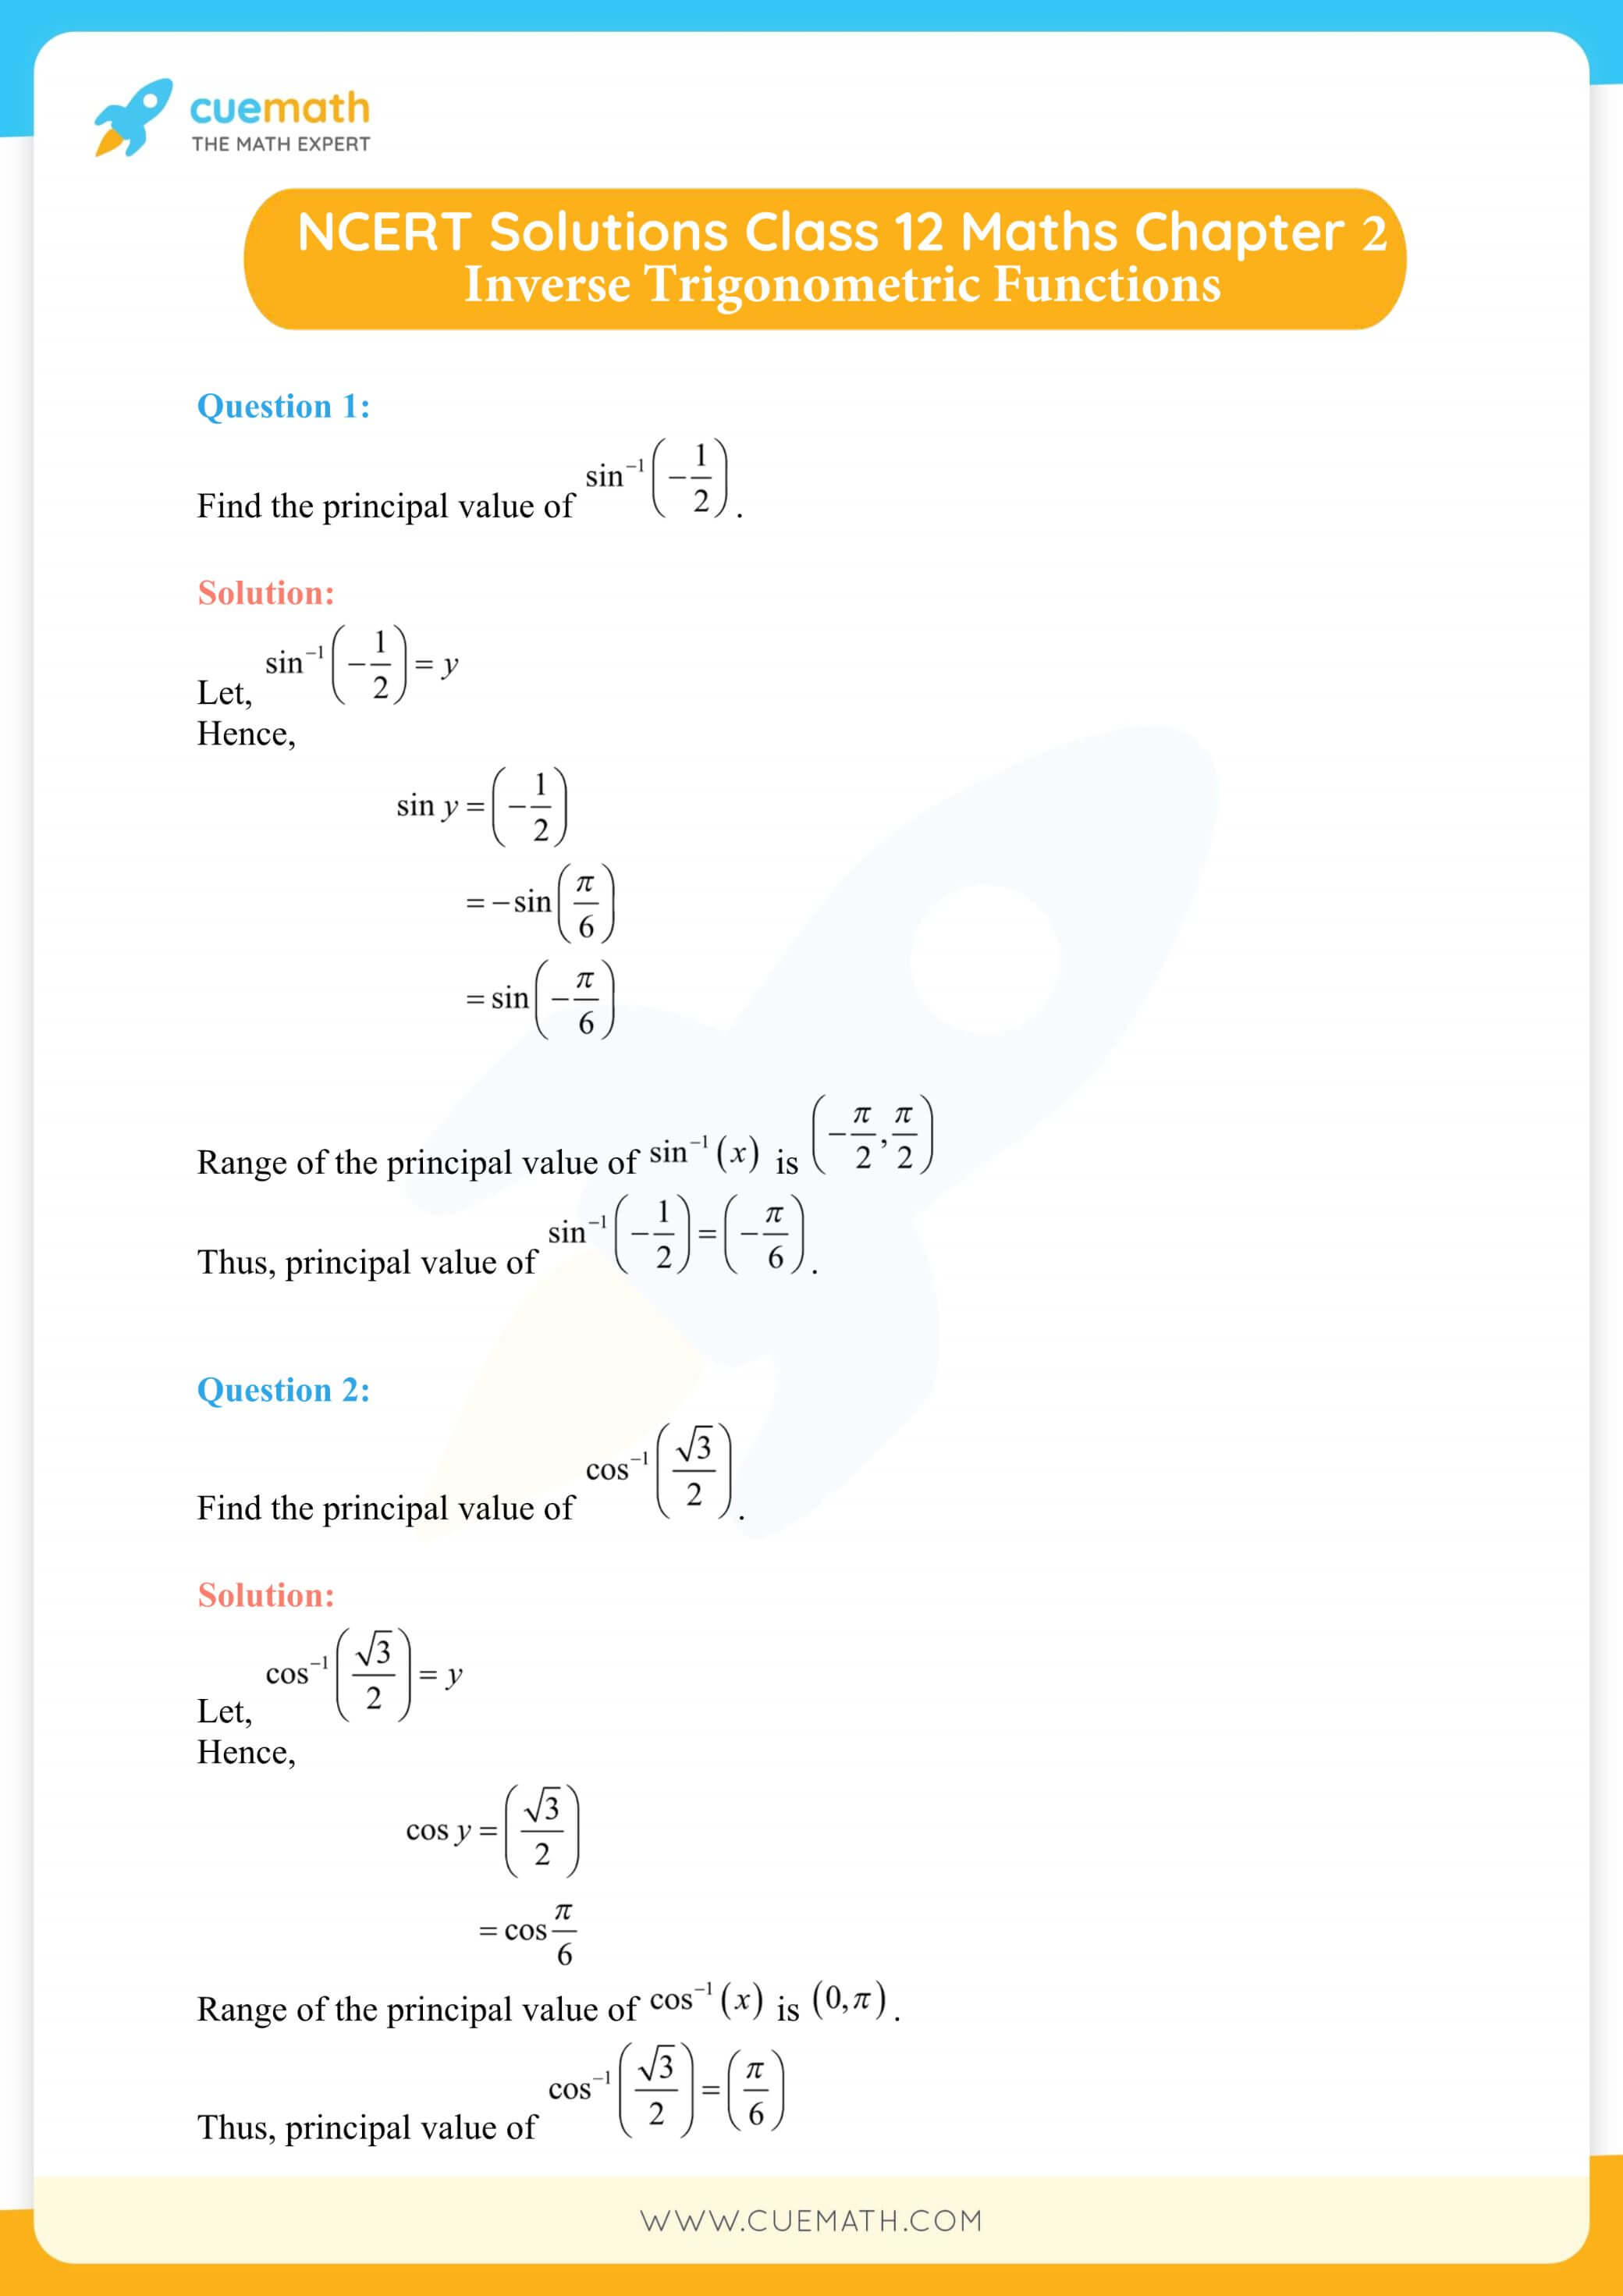 NCERT Solutions Class 12 Maths Chapter 2 Exercise 2.1 1